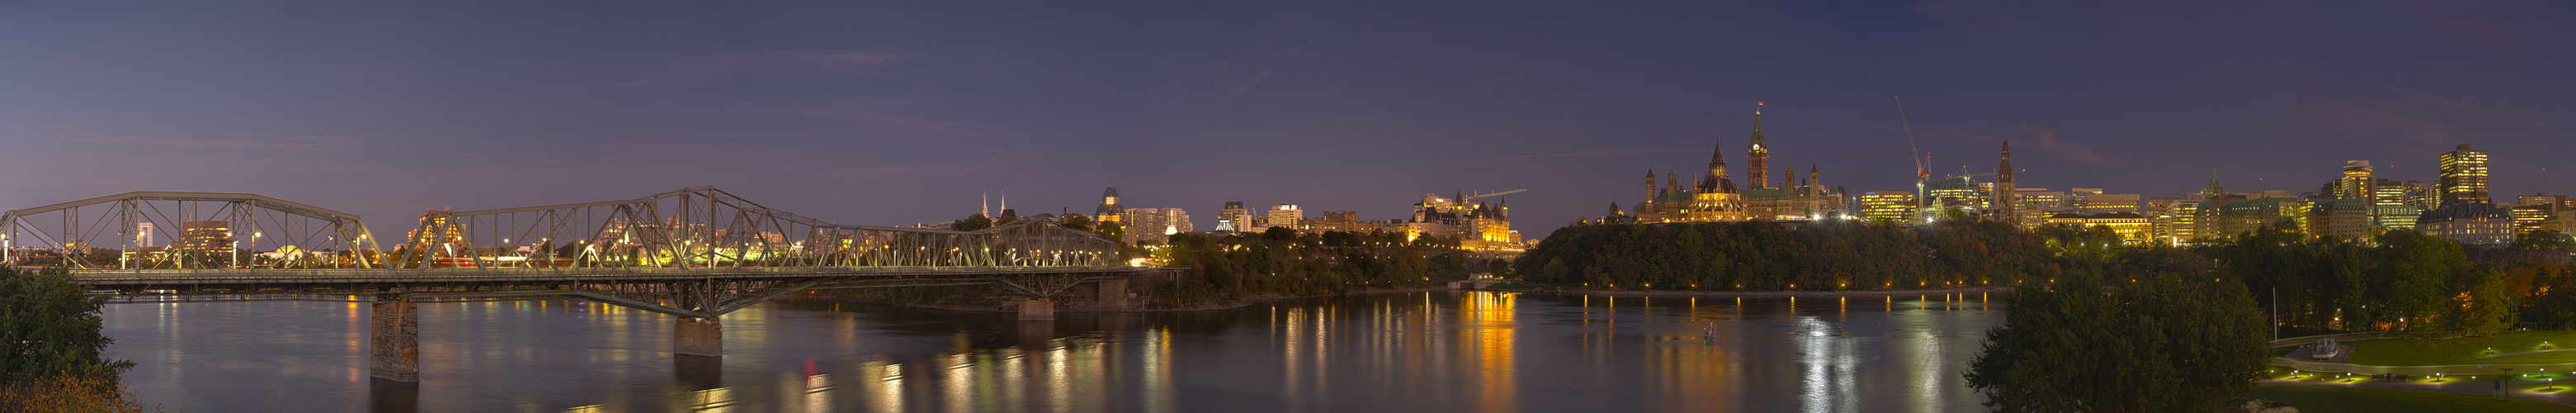 Canada Ottawa HDR Panorama V2